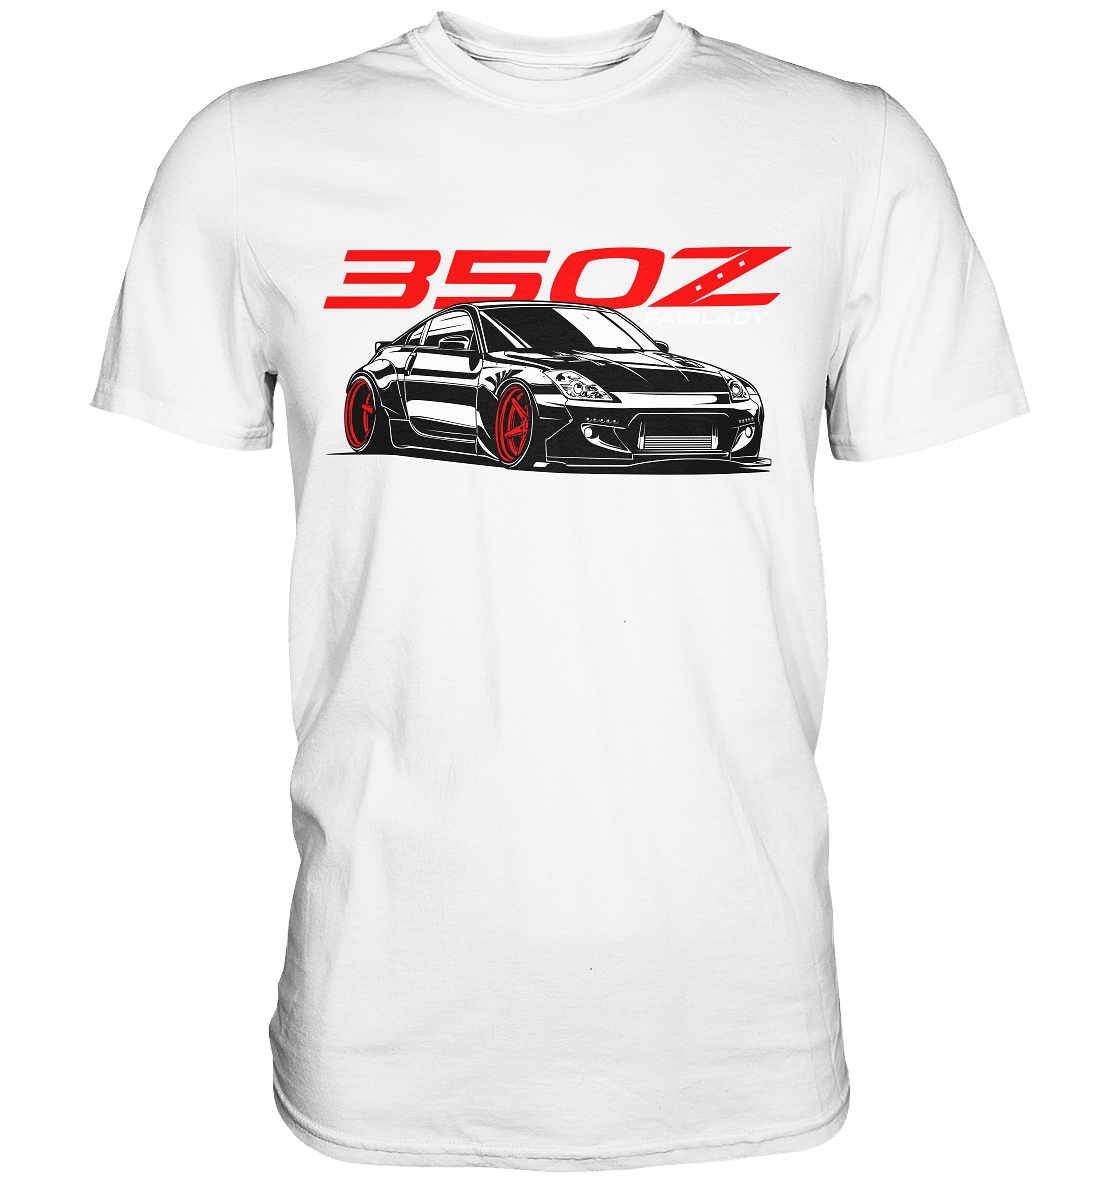 Nissan 350Z Fairlady - Premium Shirt - MotoMerch.de